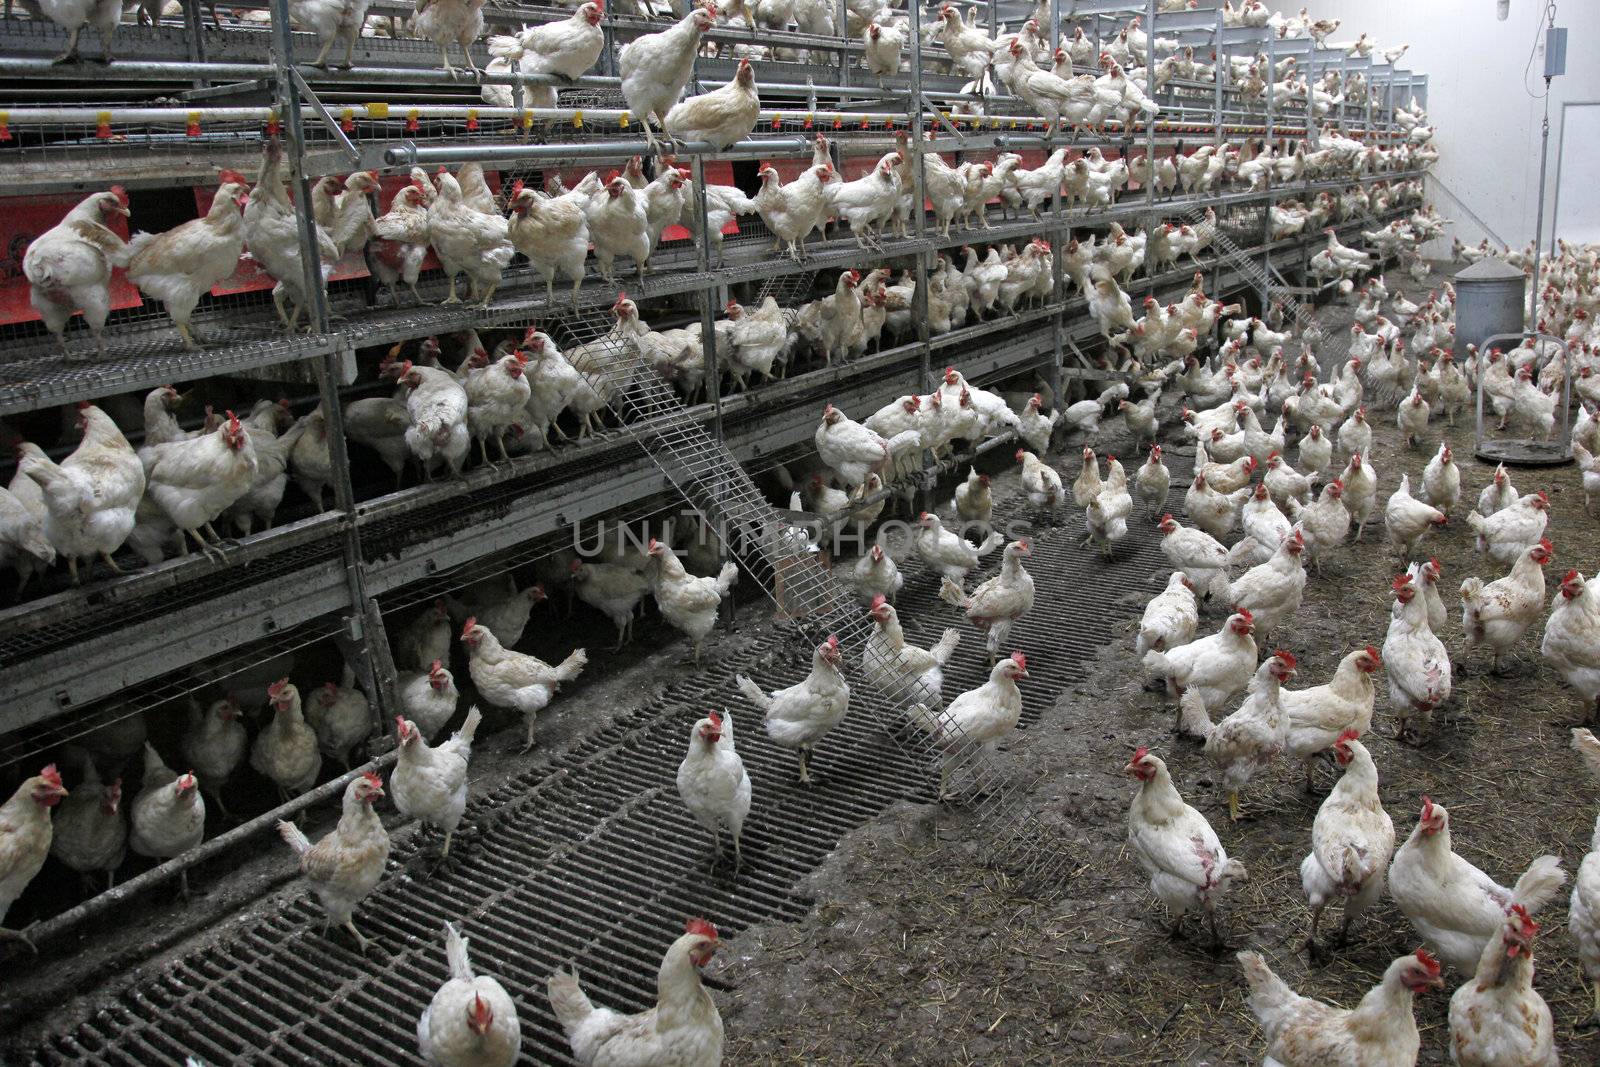 lot of biological chicken in barn of chicken farm